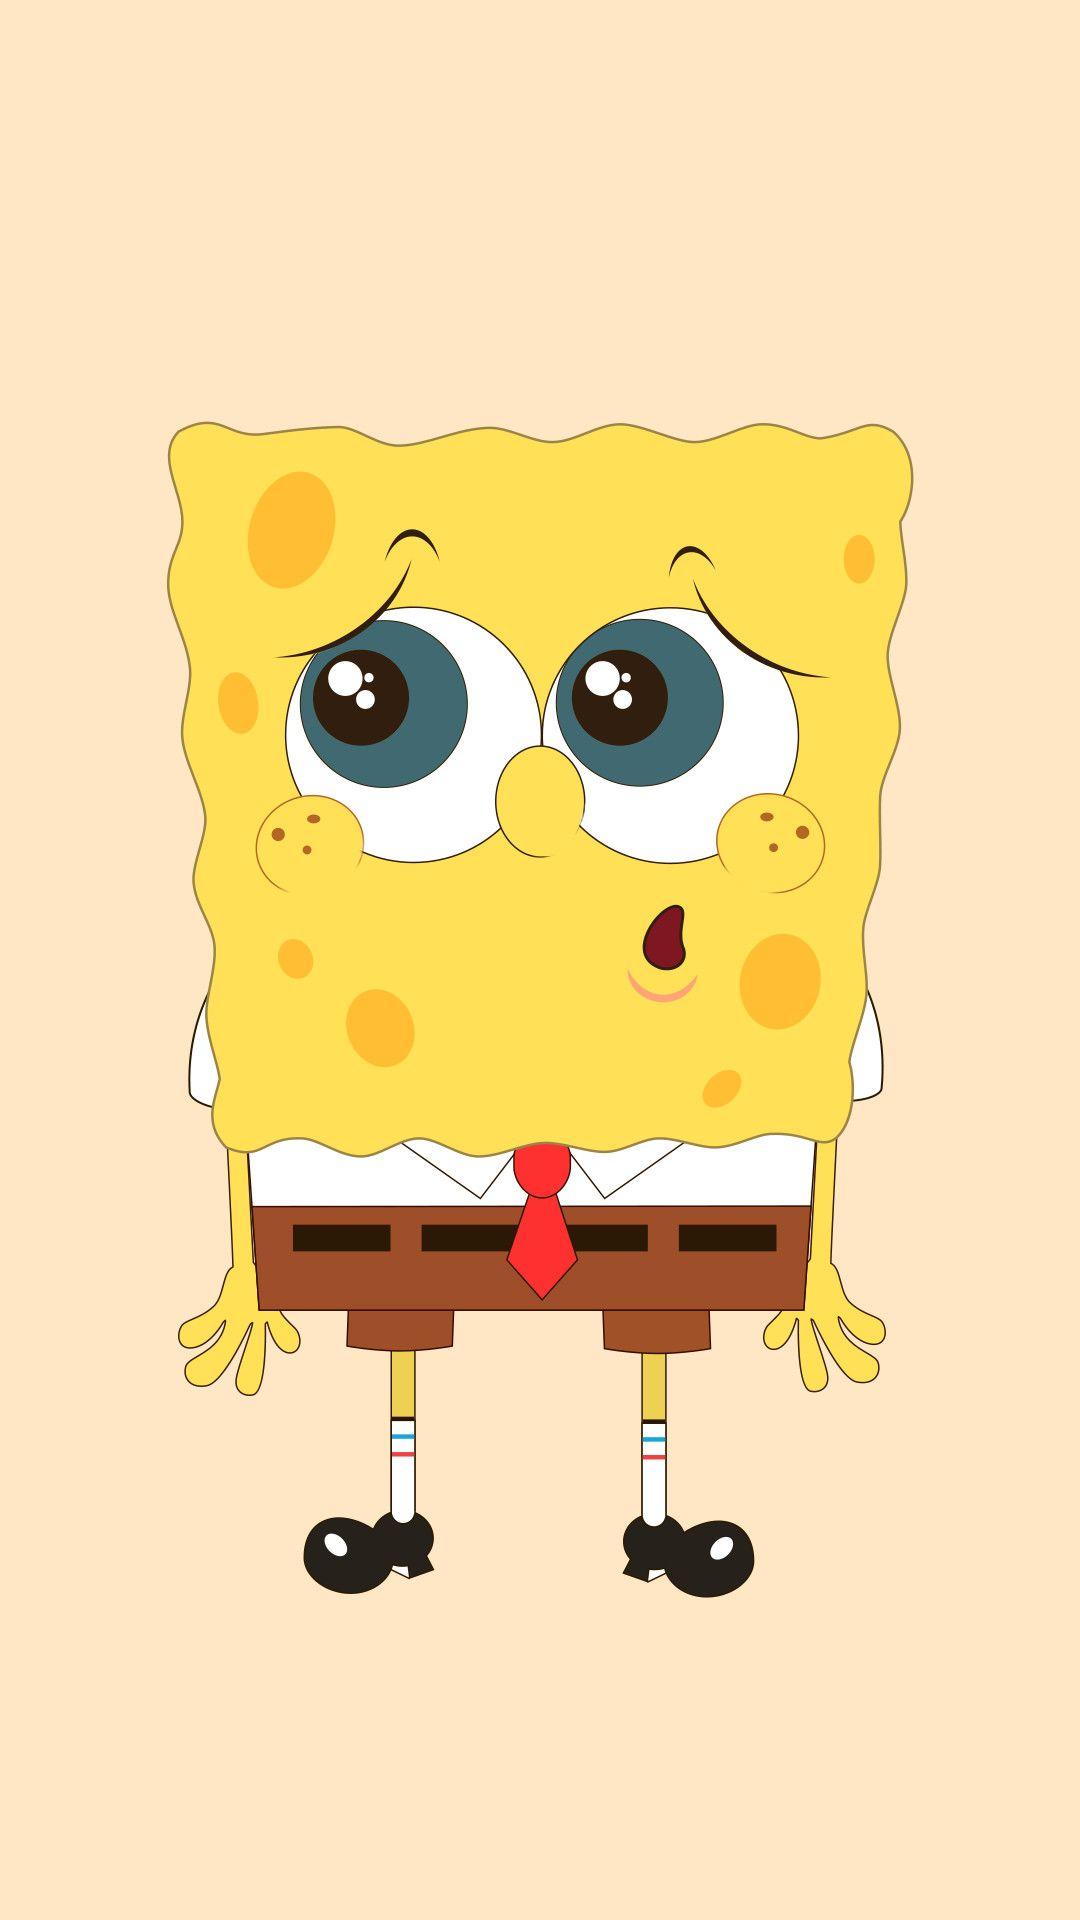 Download Sad Spongebob Crying Wallpaper